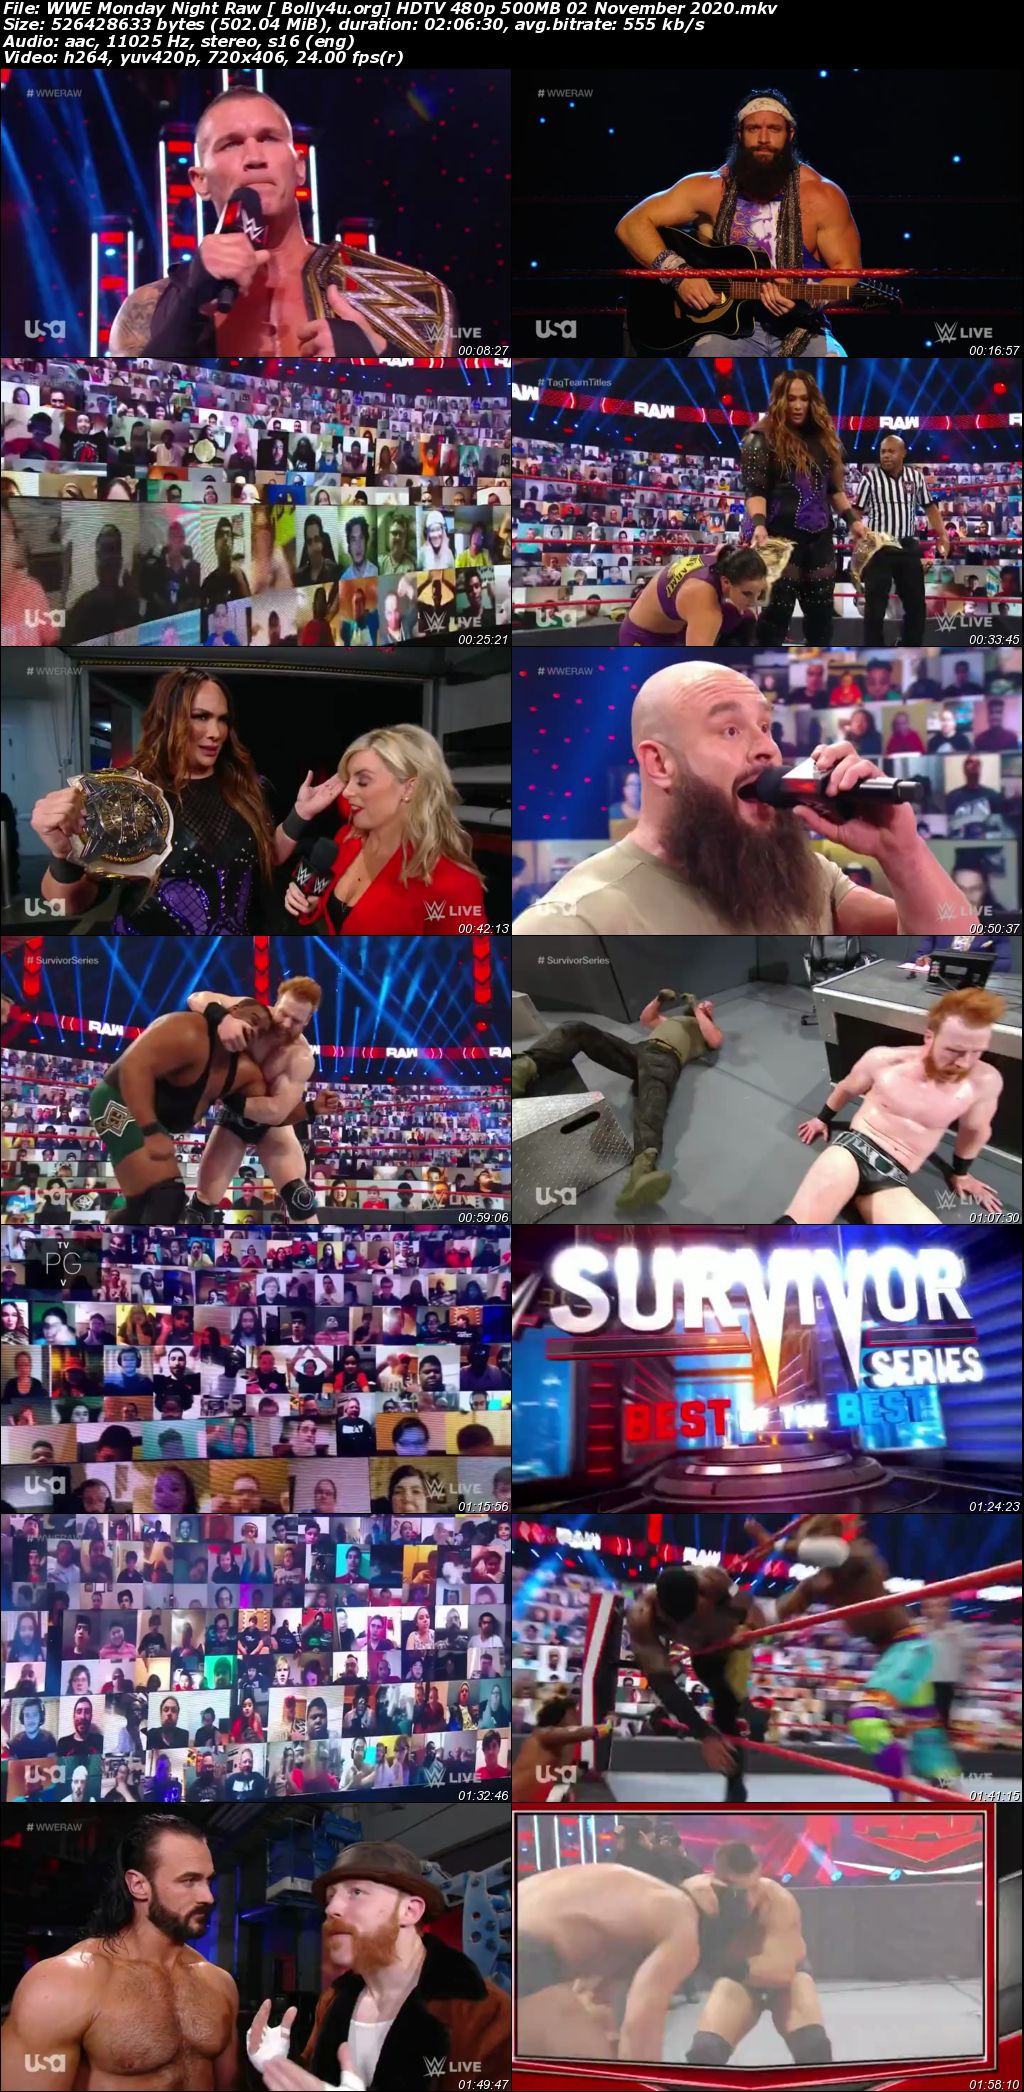 WWE Monday Night Raw HDTV 480p 500MB 02 November 2020 Download